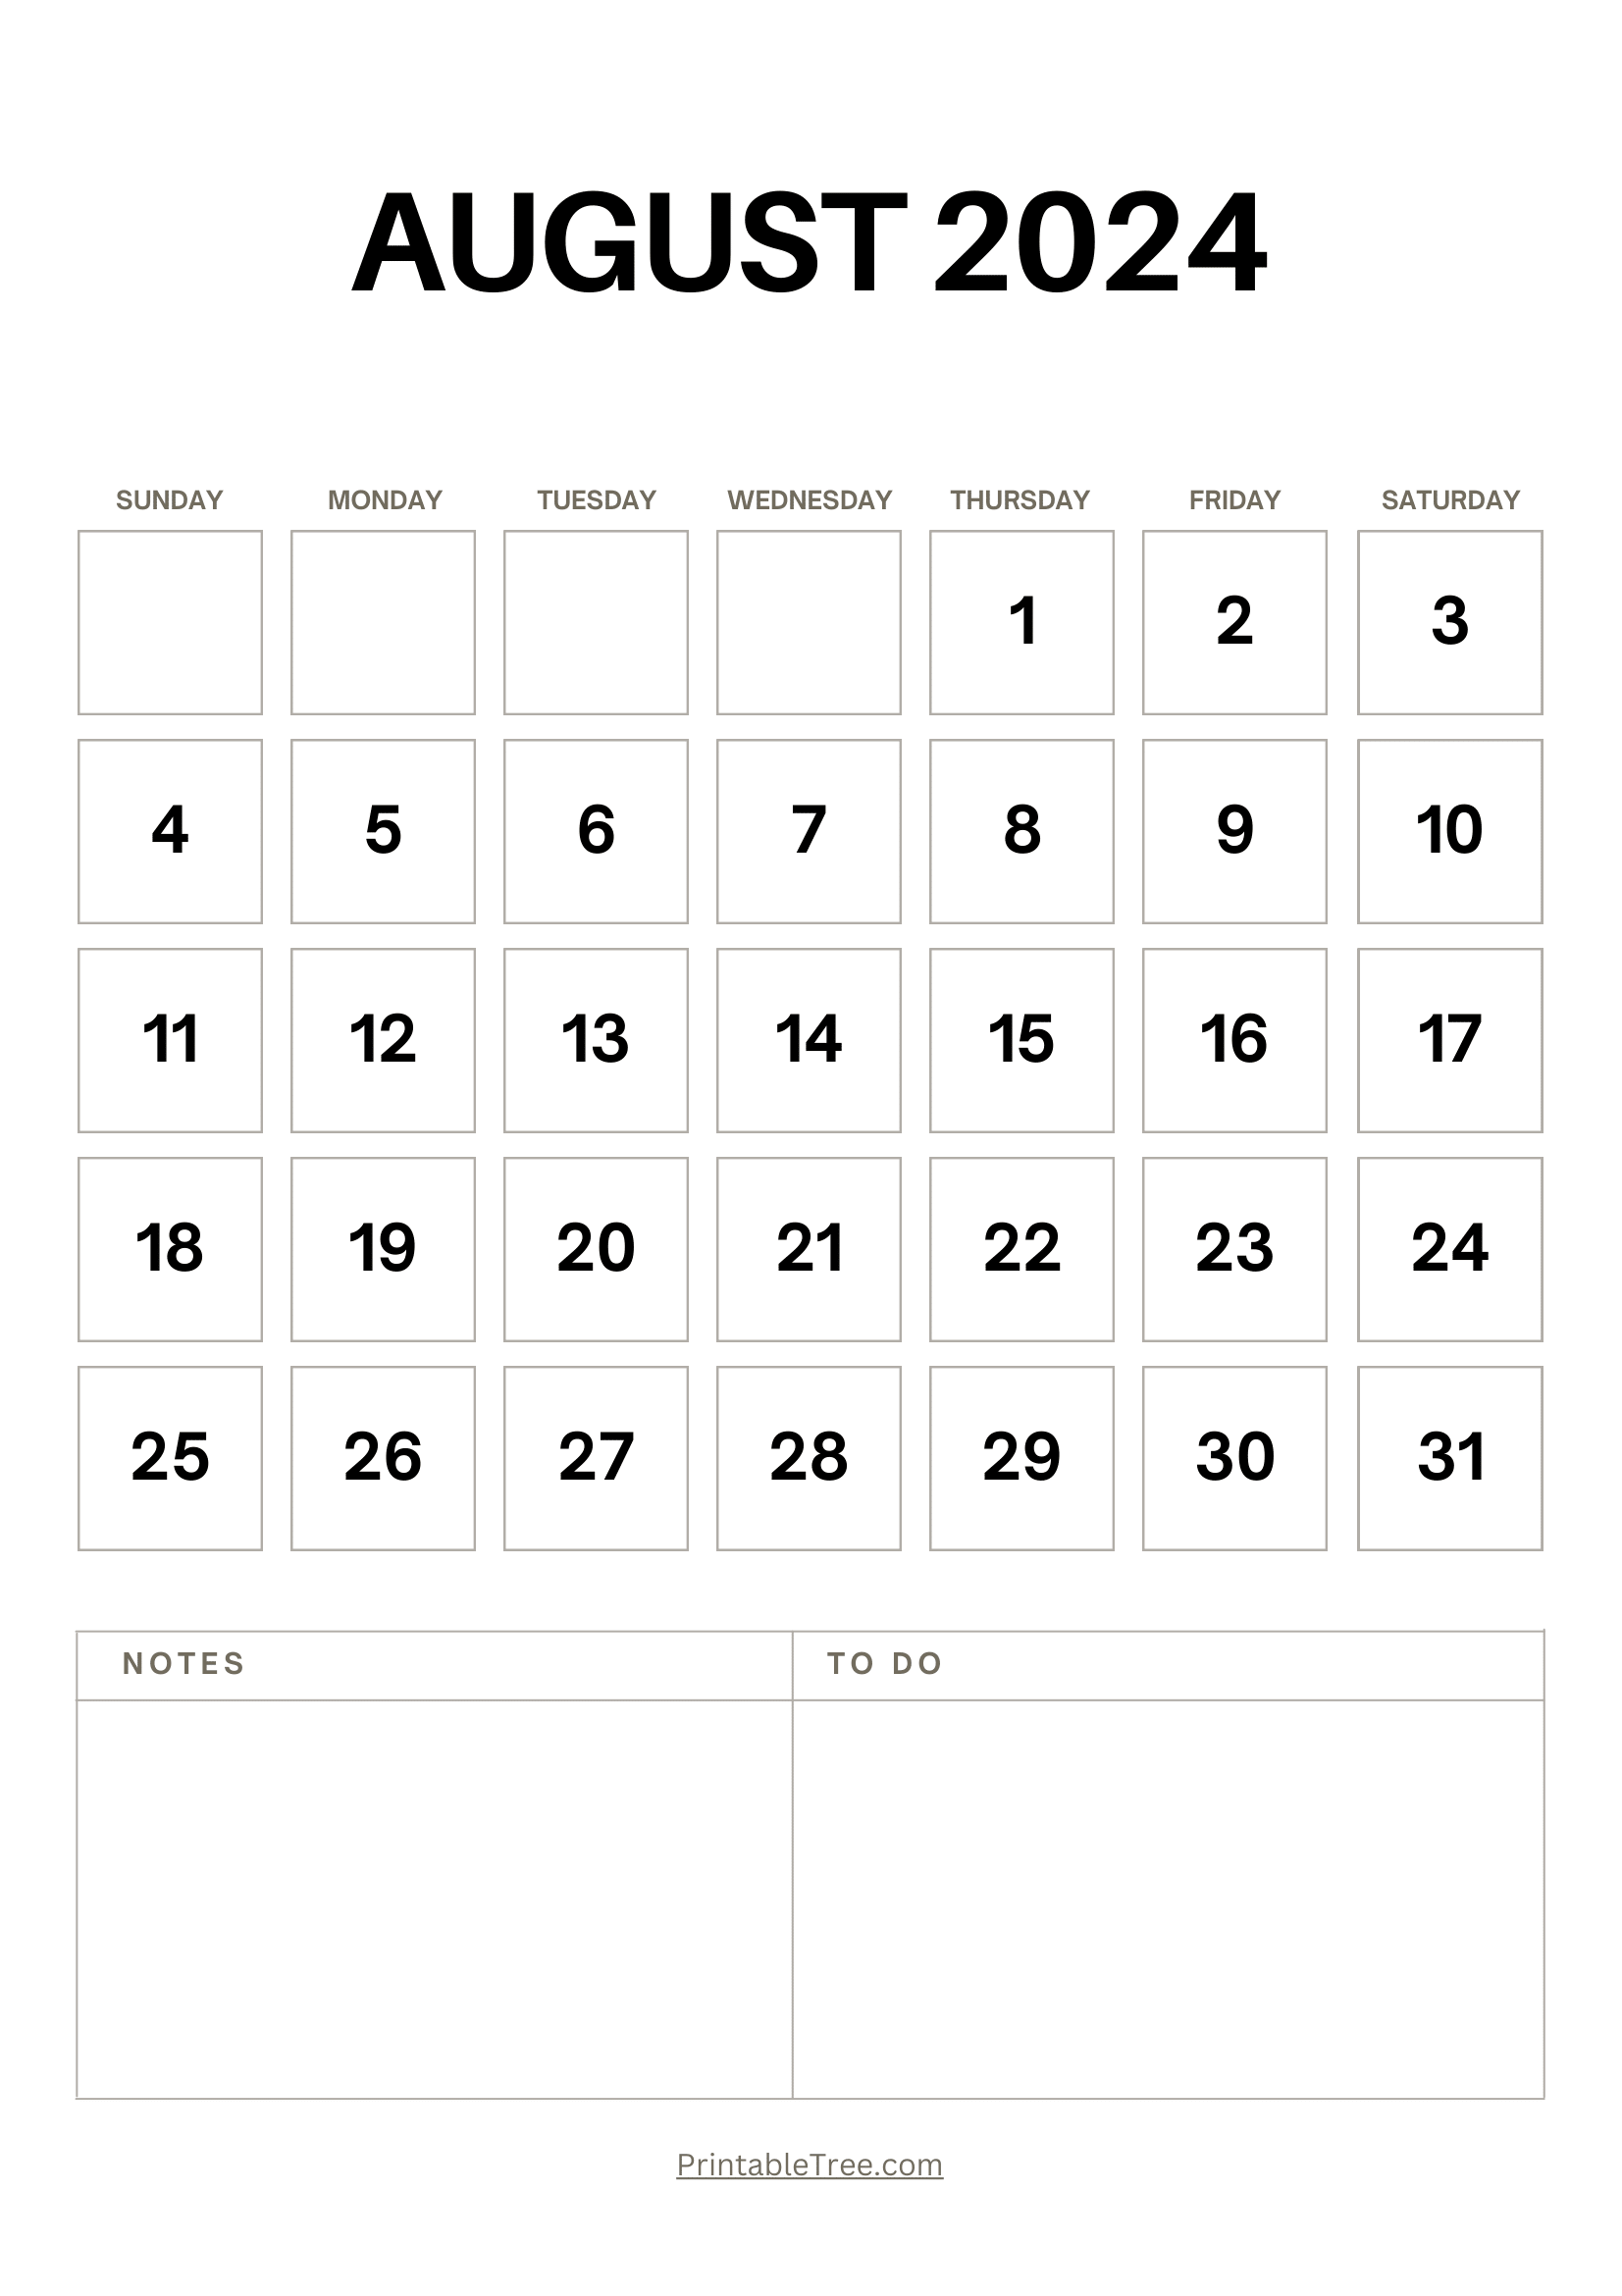 August 2024 Calendar Printable Pdf Templates Free Download regarding Free Printable August 2024 Calendar With Notes